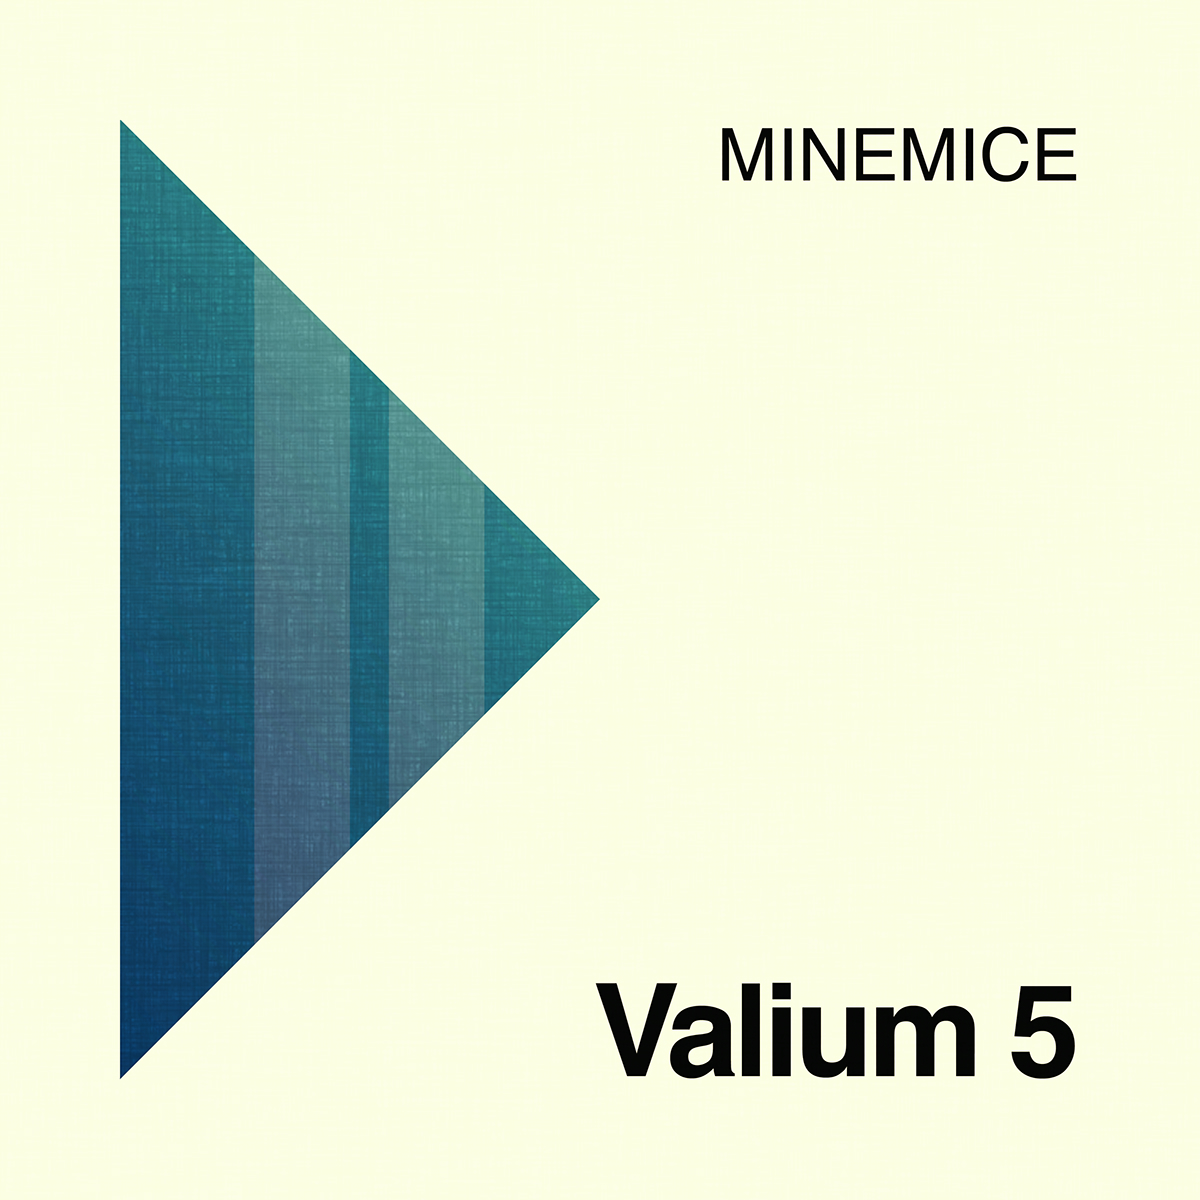 helvetica Minemice cover type